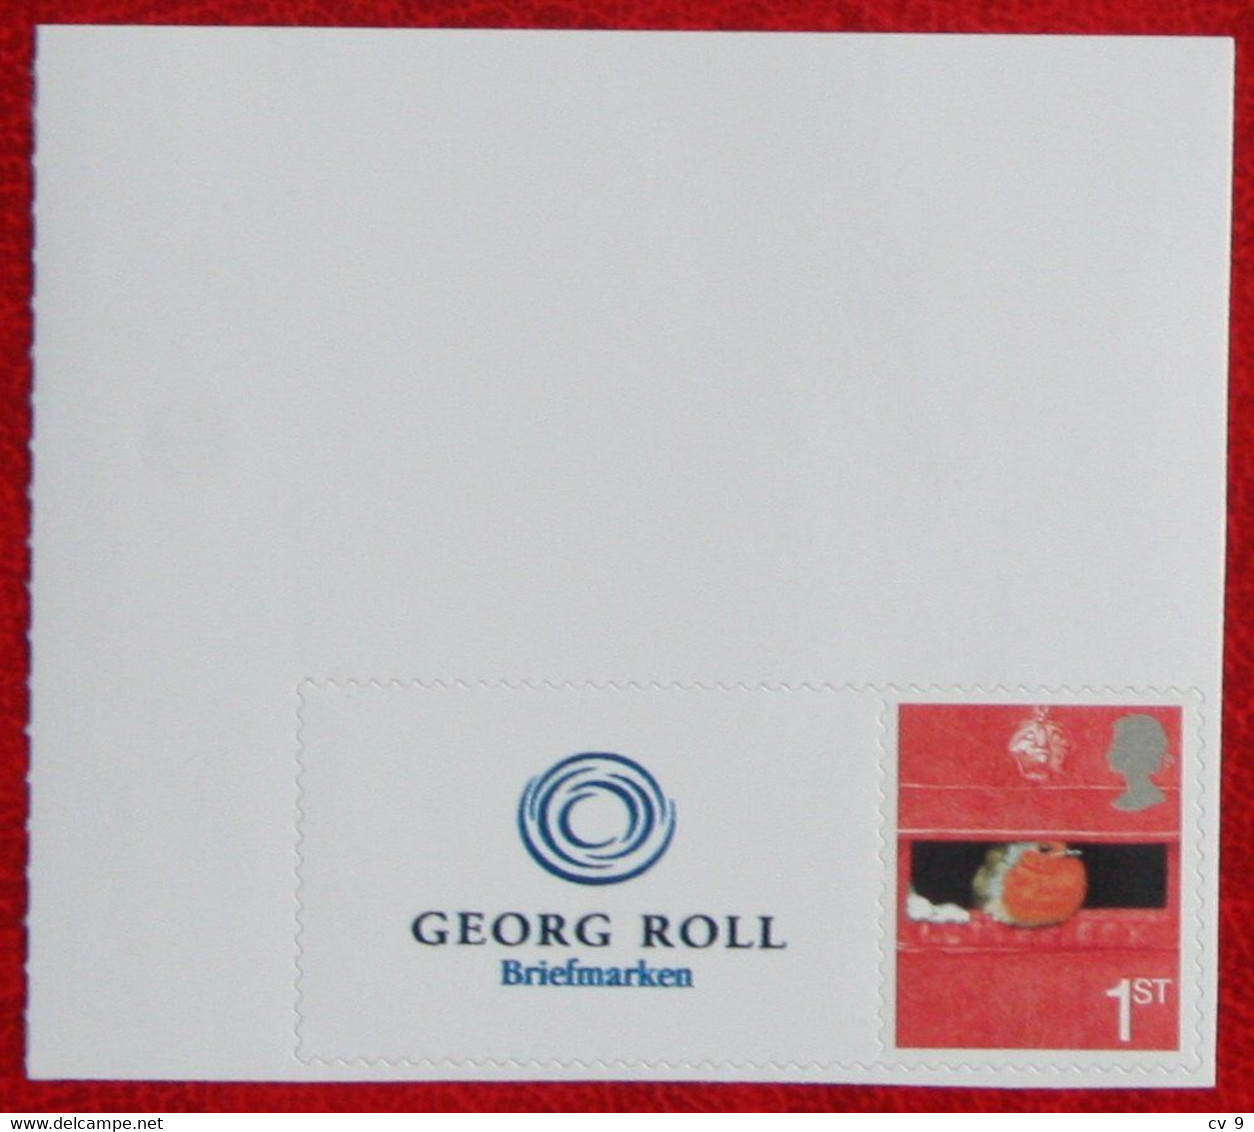 Smiler Smilers Personal Stamp Georg Roll Briefmarken ROBIN Bird POSTFRIS MNH ** ENGLAND GRANDE-BRETAGNE GB GREAT BRITAIN - Francobolli Personalizzati